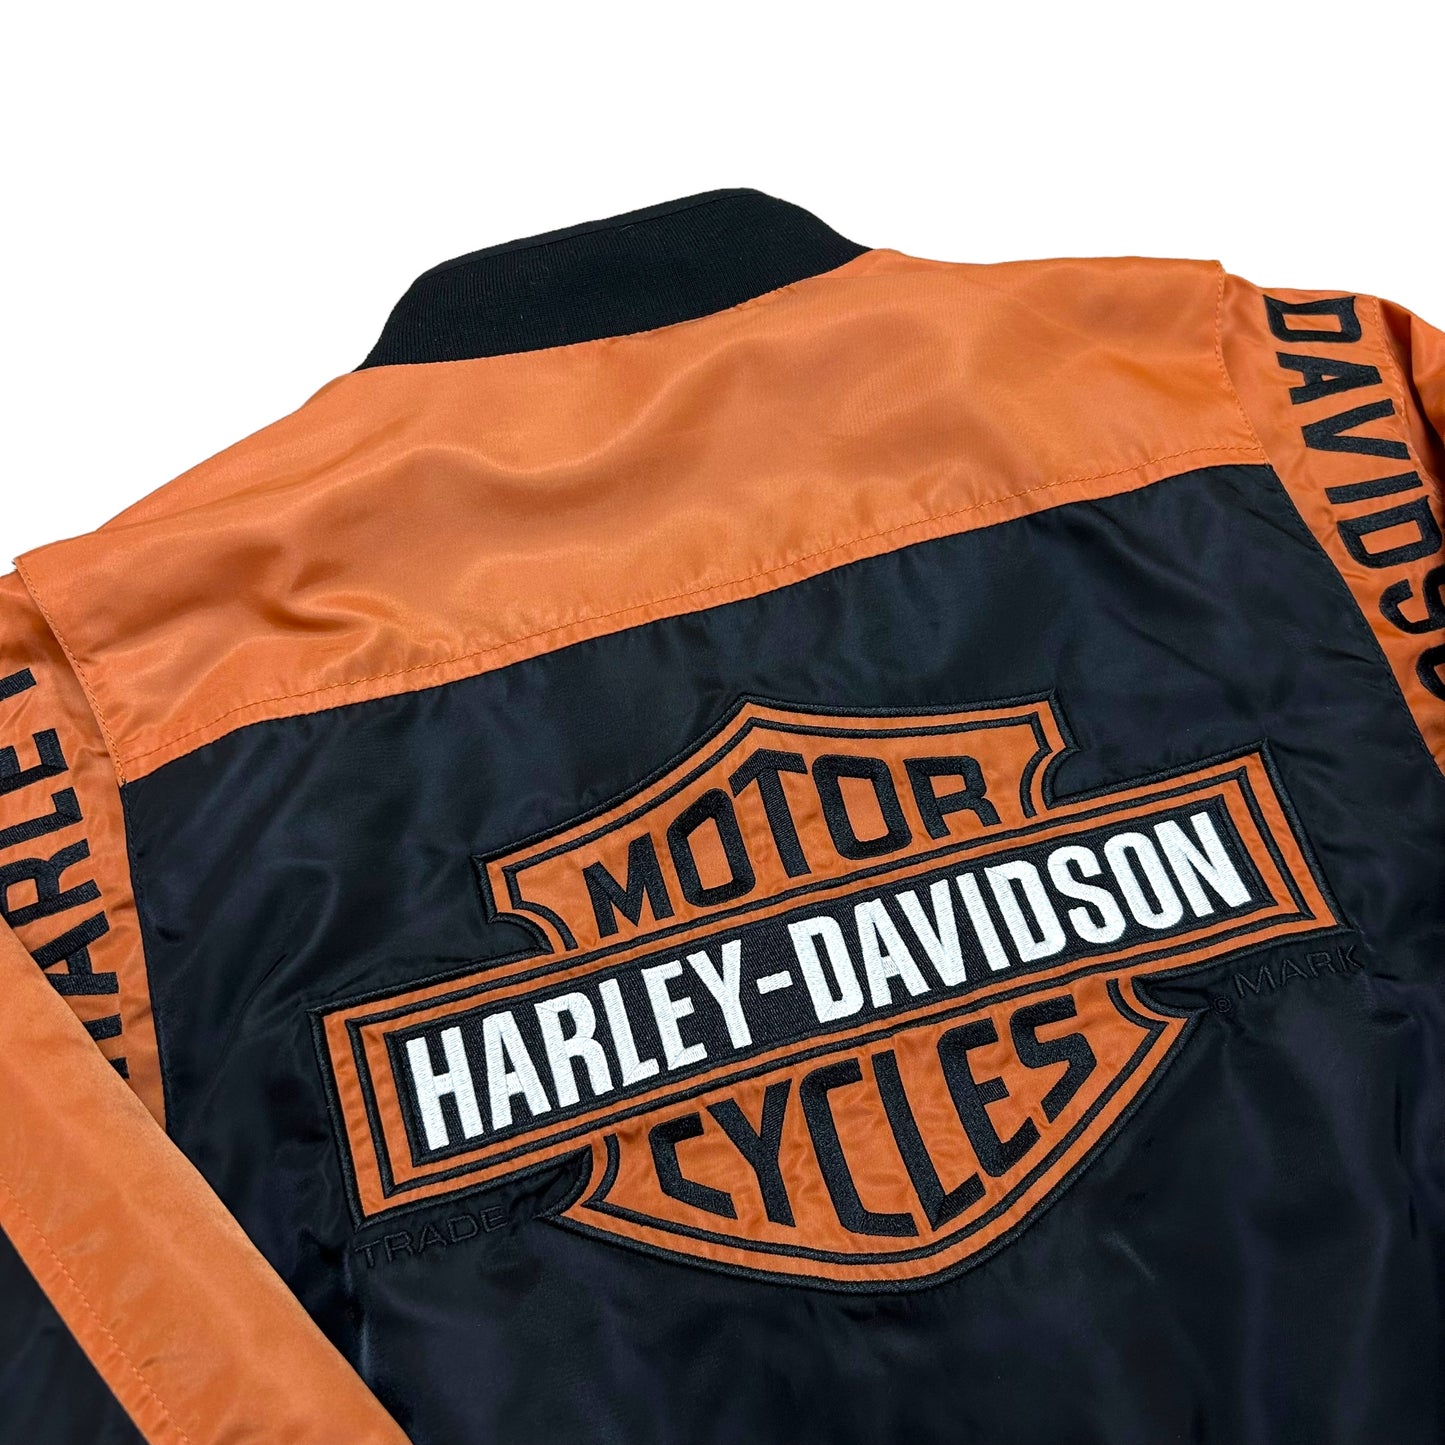 Late 2000s Harley Davidson Black/Orange Embroidered Bomber Style Jacket - Size Medium (Fits M/L)